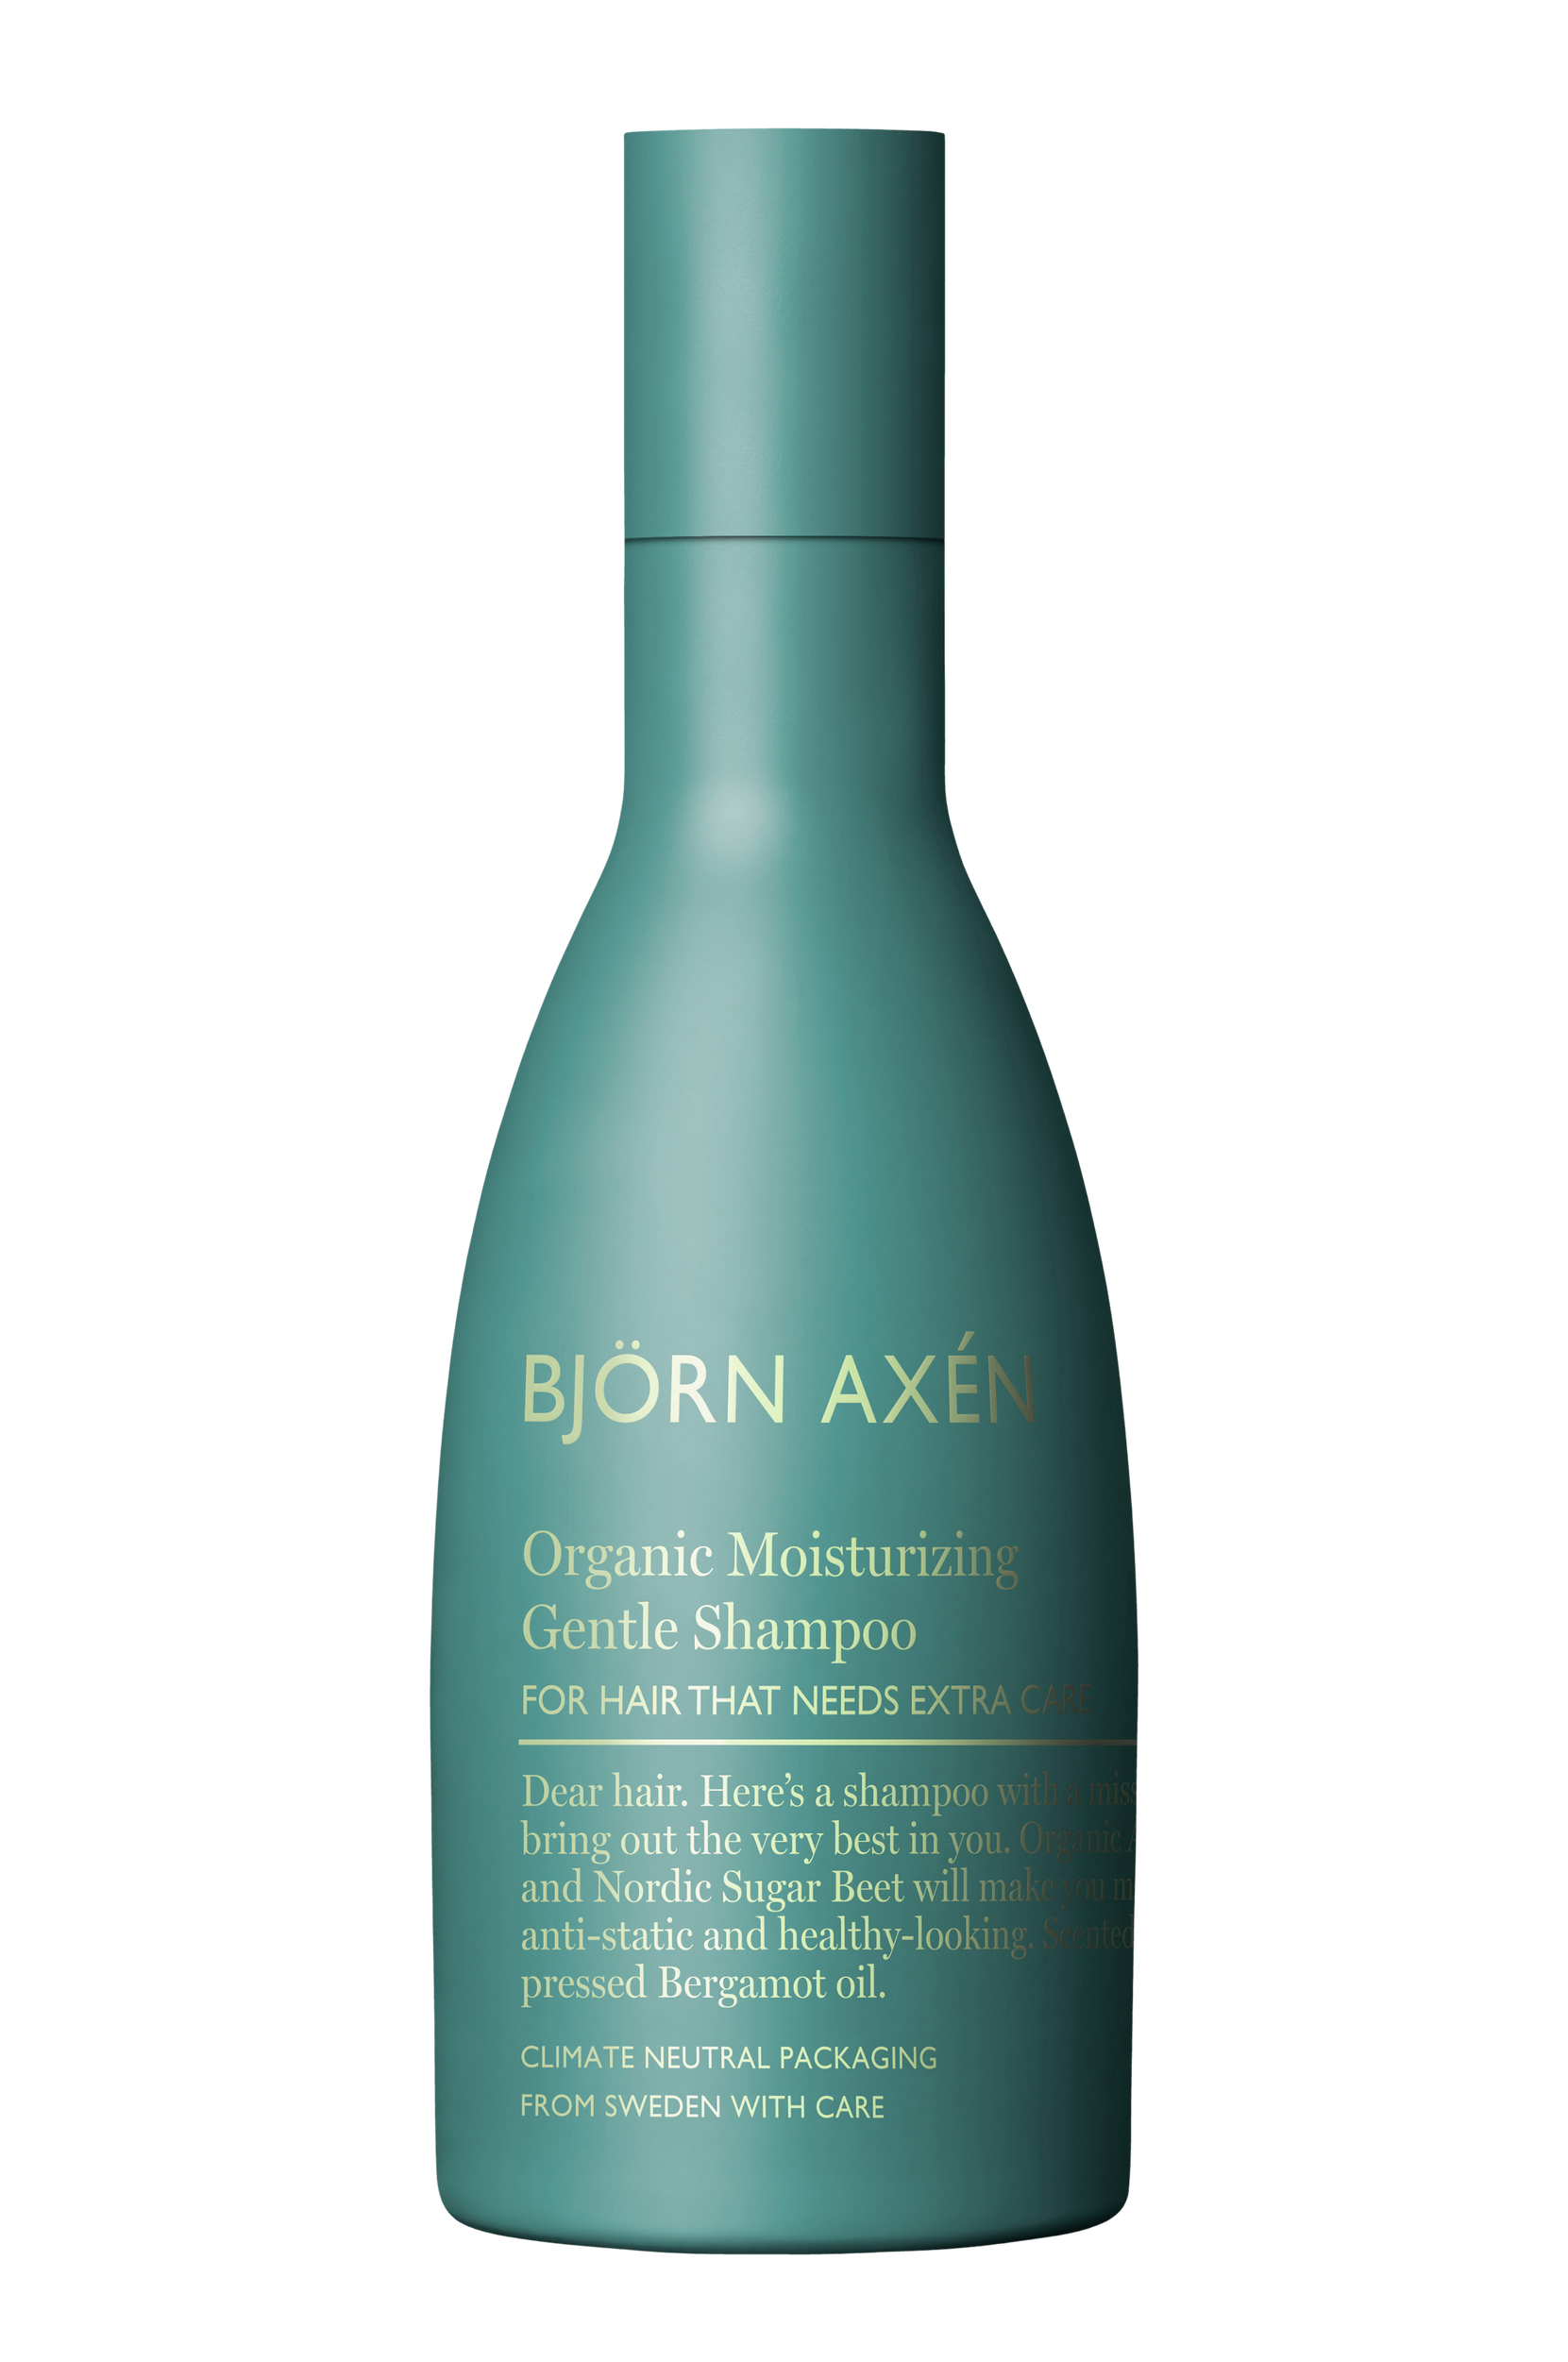 Organic Moisturizing Gentle Shampoo 250ml, Björn Axén